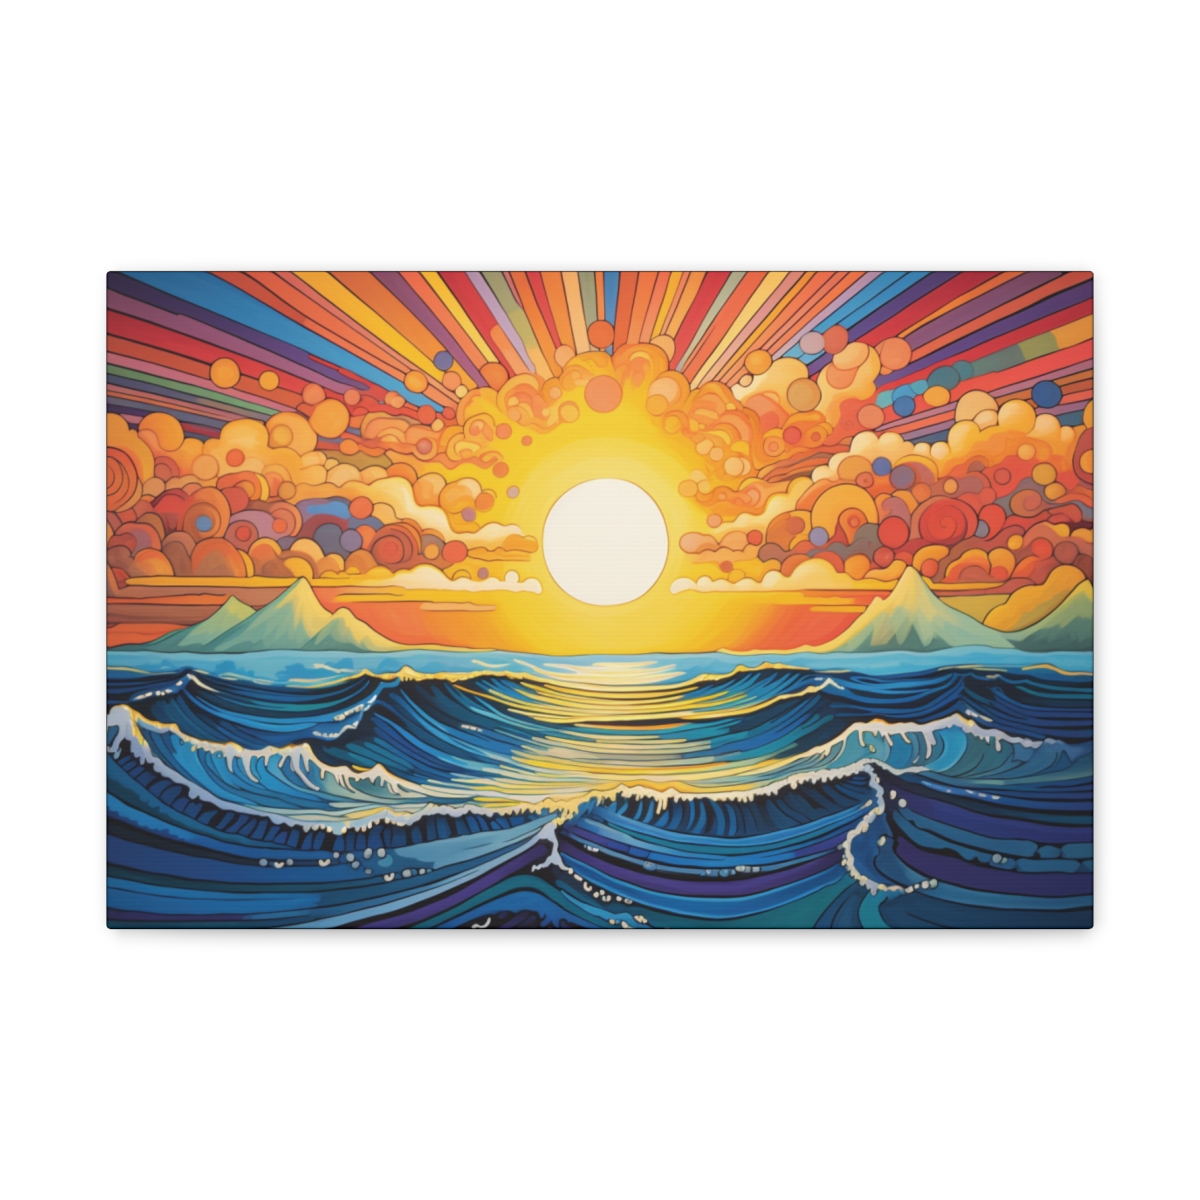 Trippy Nature Sun Art: Morning Star On The Ocean